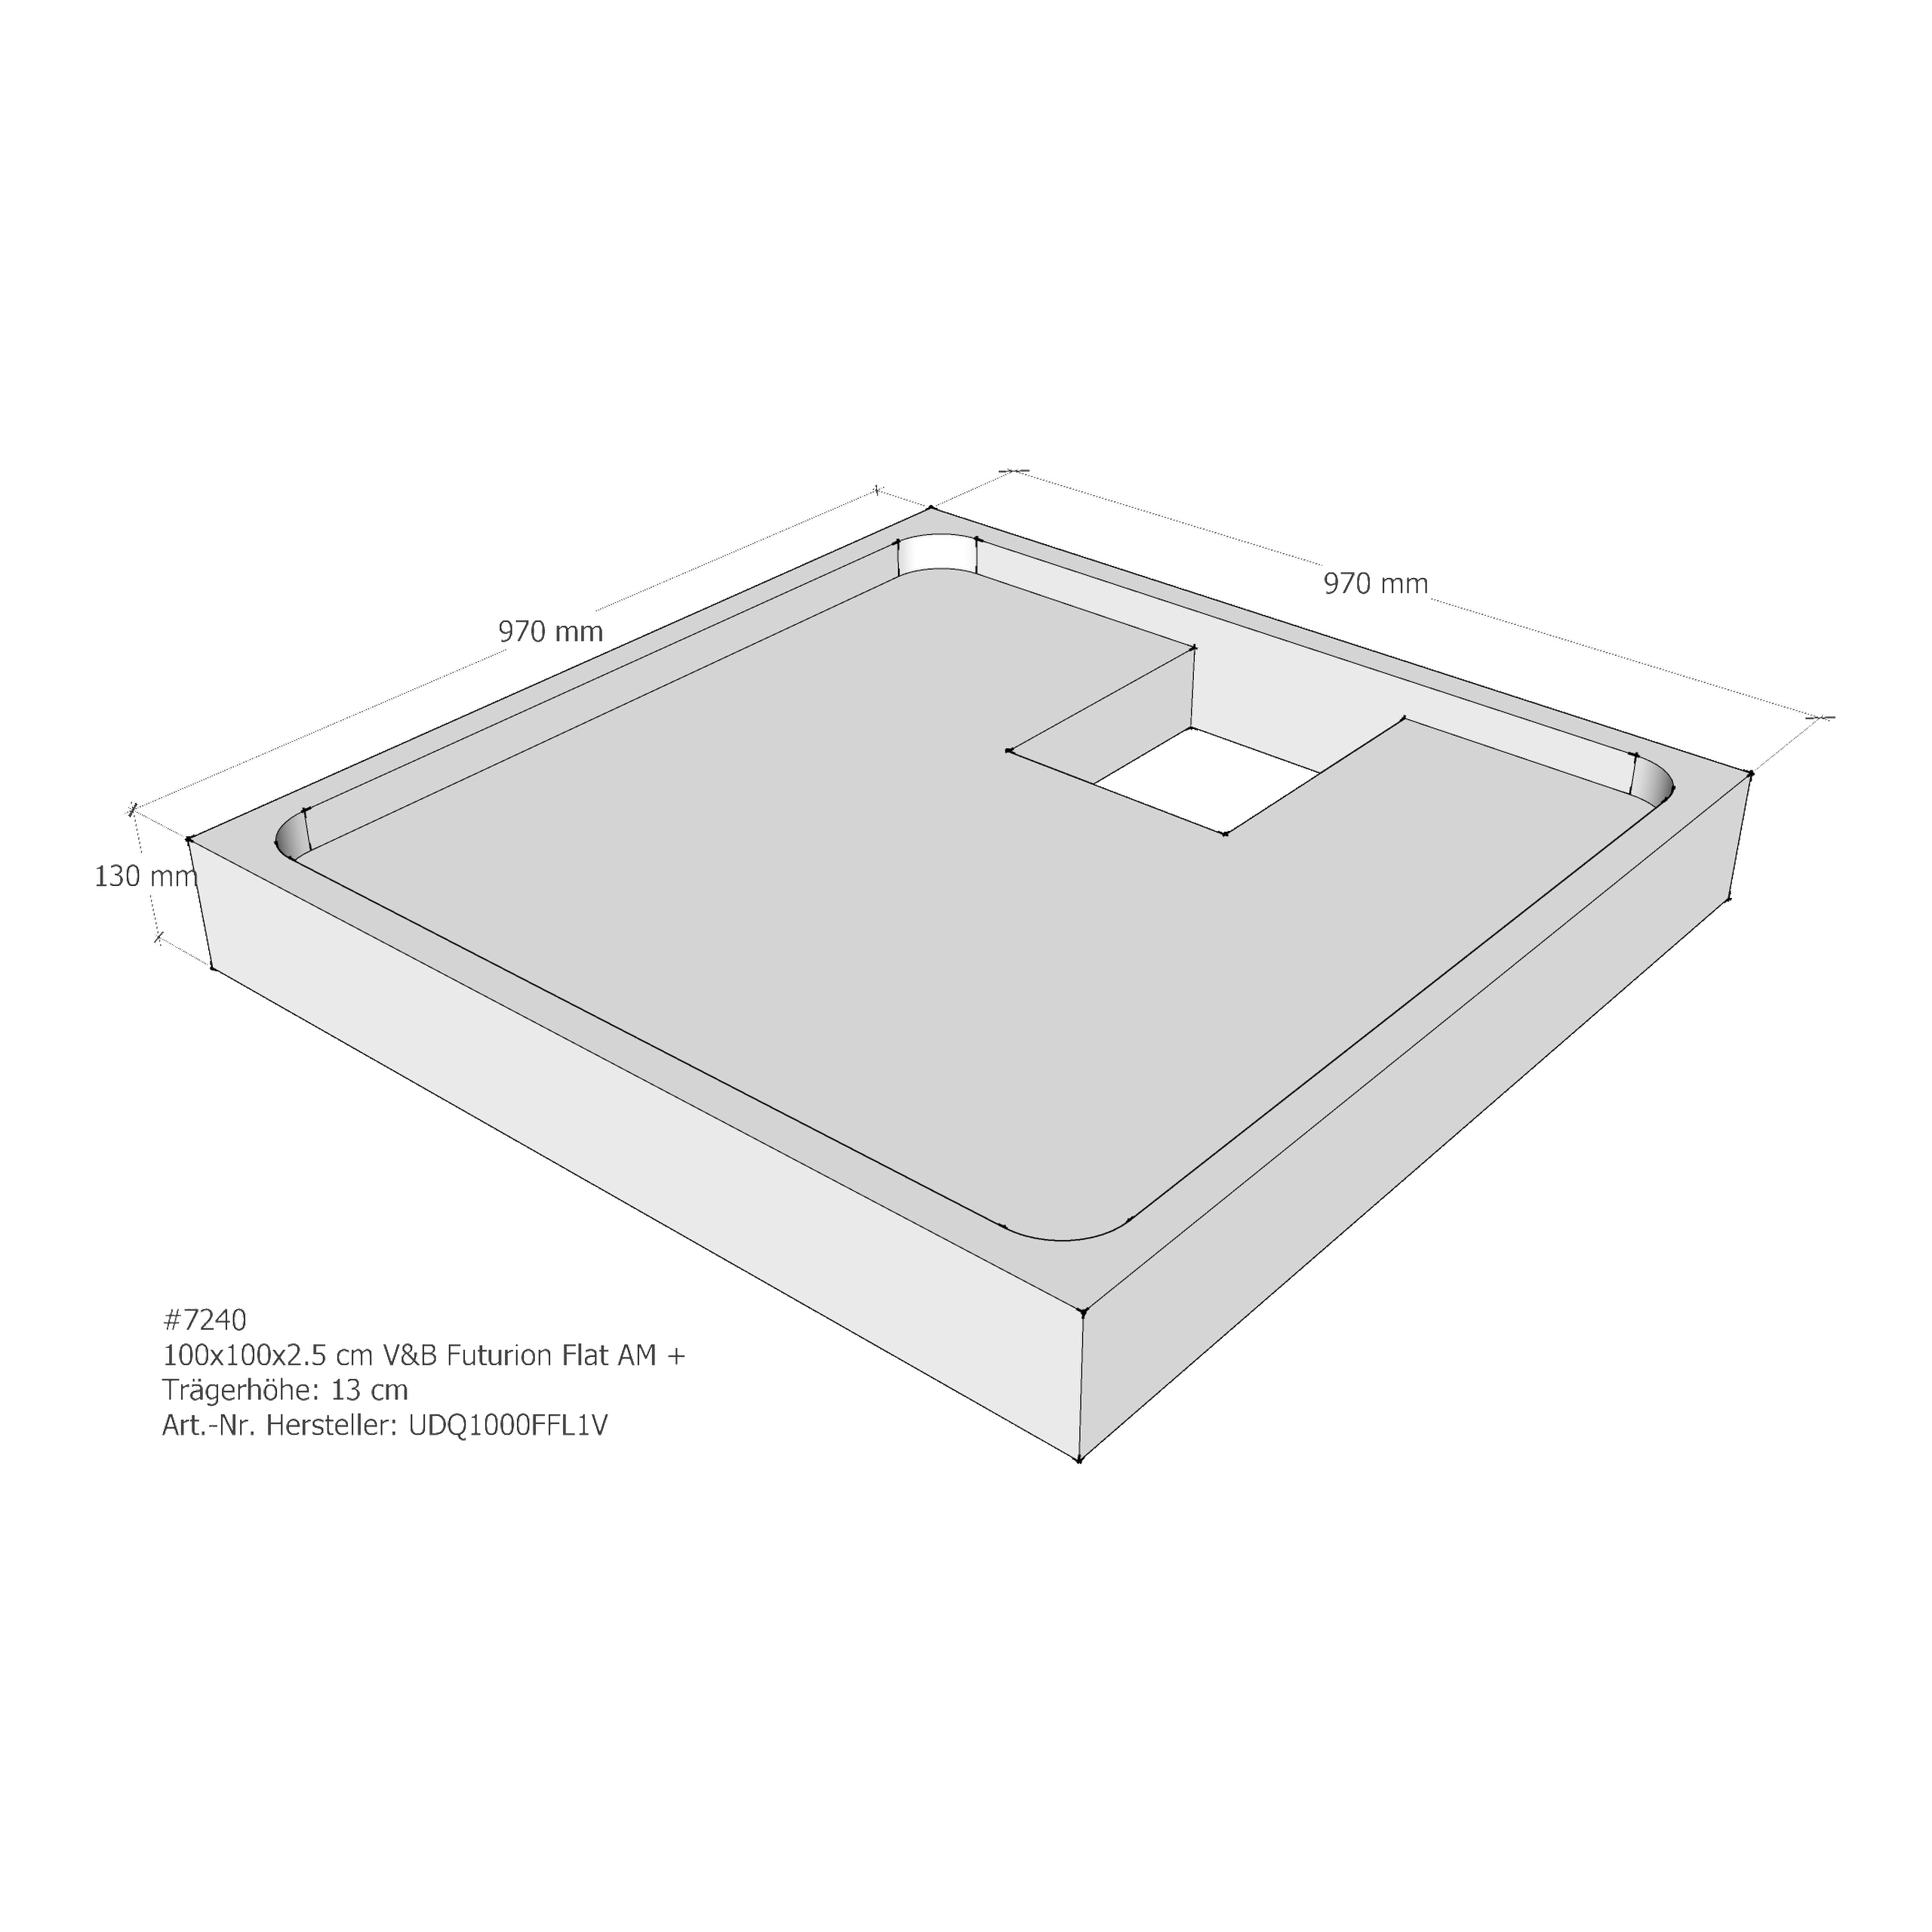 Duschwannenträger für Villeroy & Boch Futurion Flat 100 × 100 × 2,5 cm